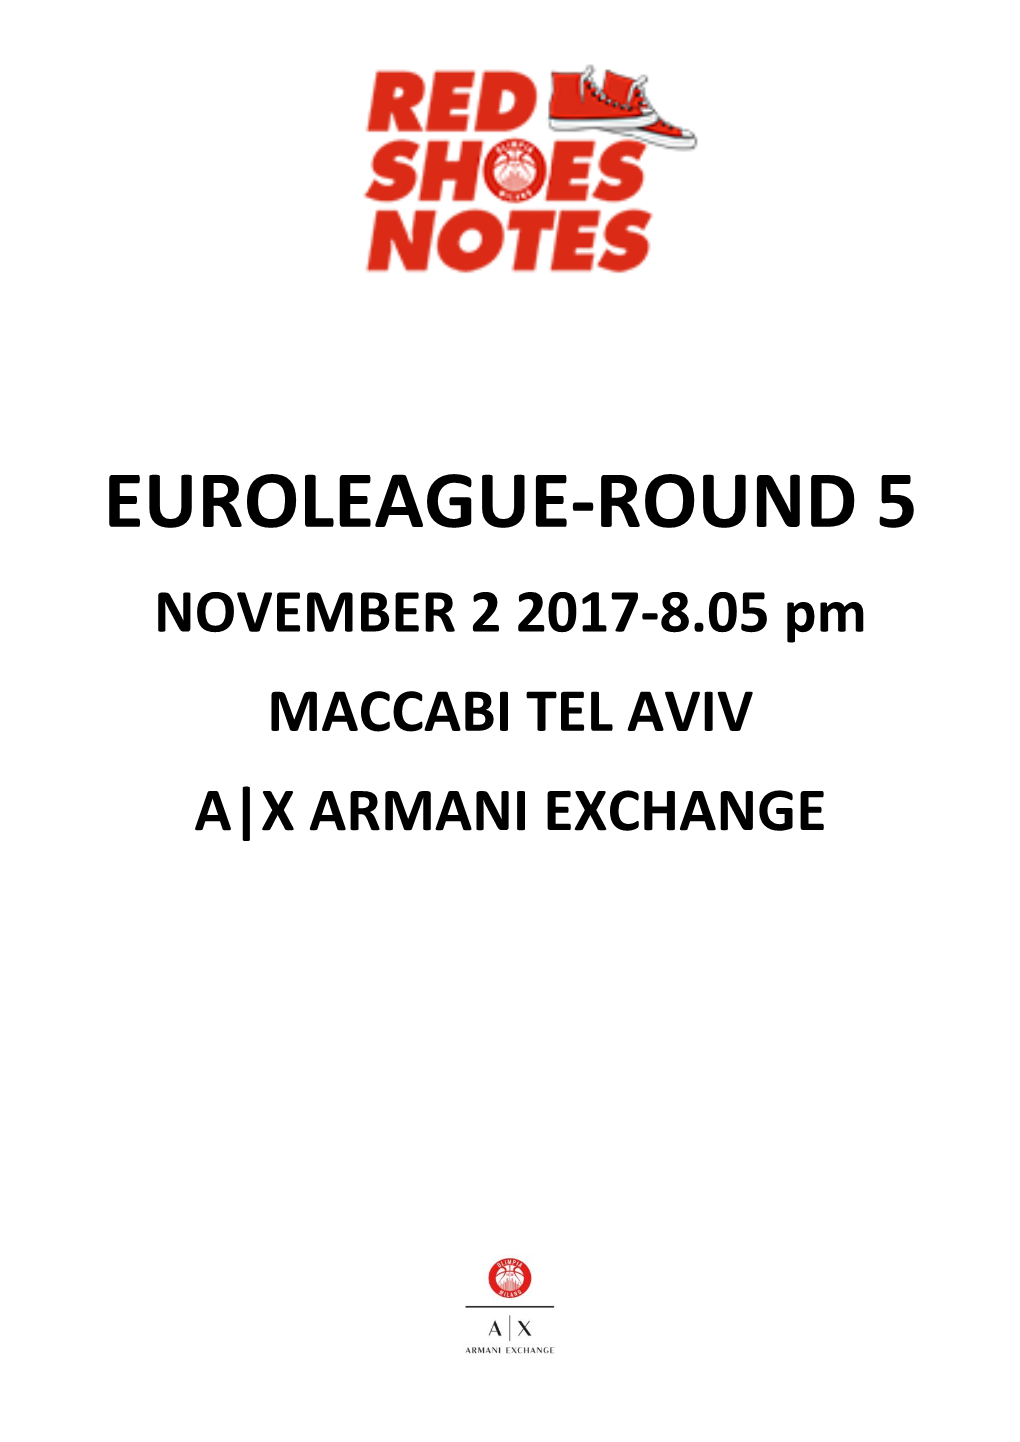 EUROLEAGUE-ROUND 5 NOVEMBER 2 2017-8.05 Pm MACCABI TEL AVIV A|X ARMANI EXCHANGE